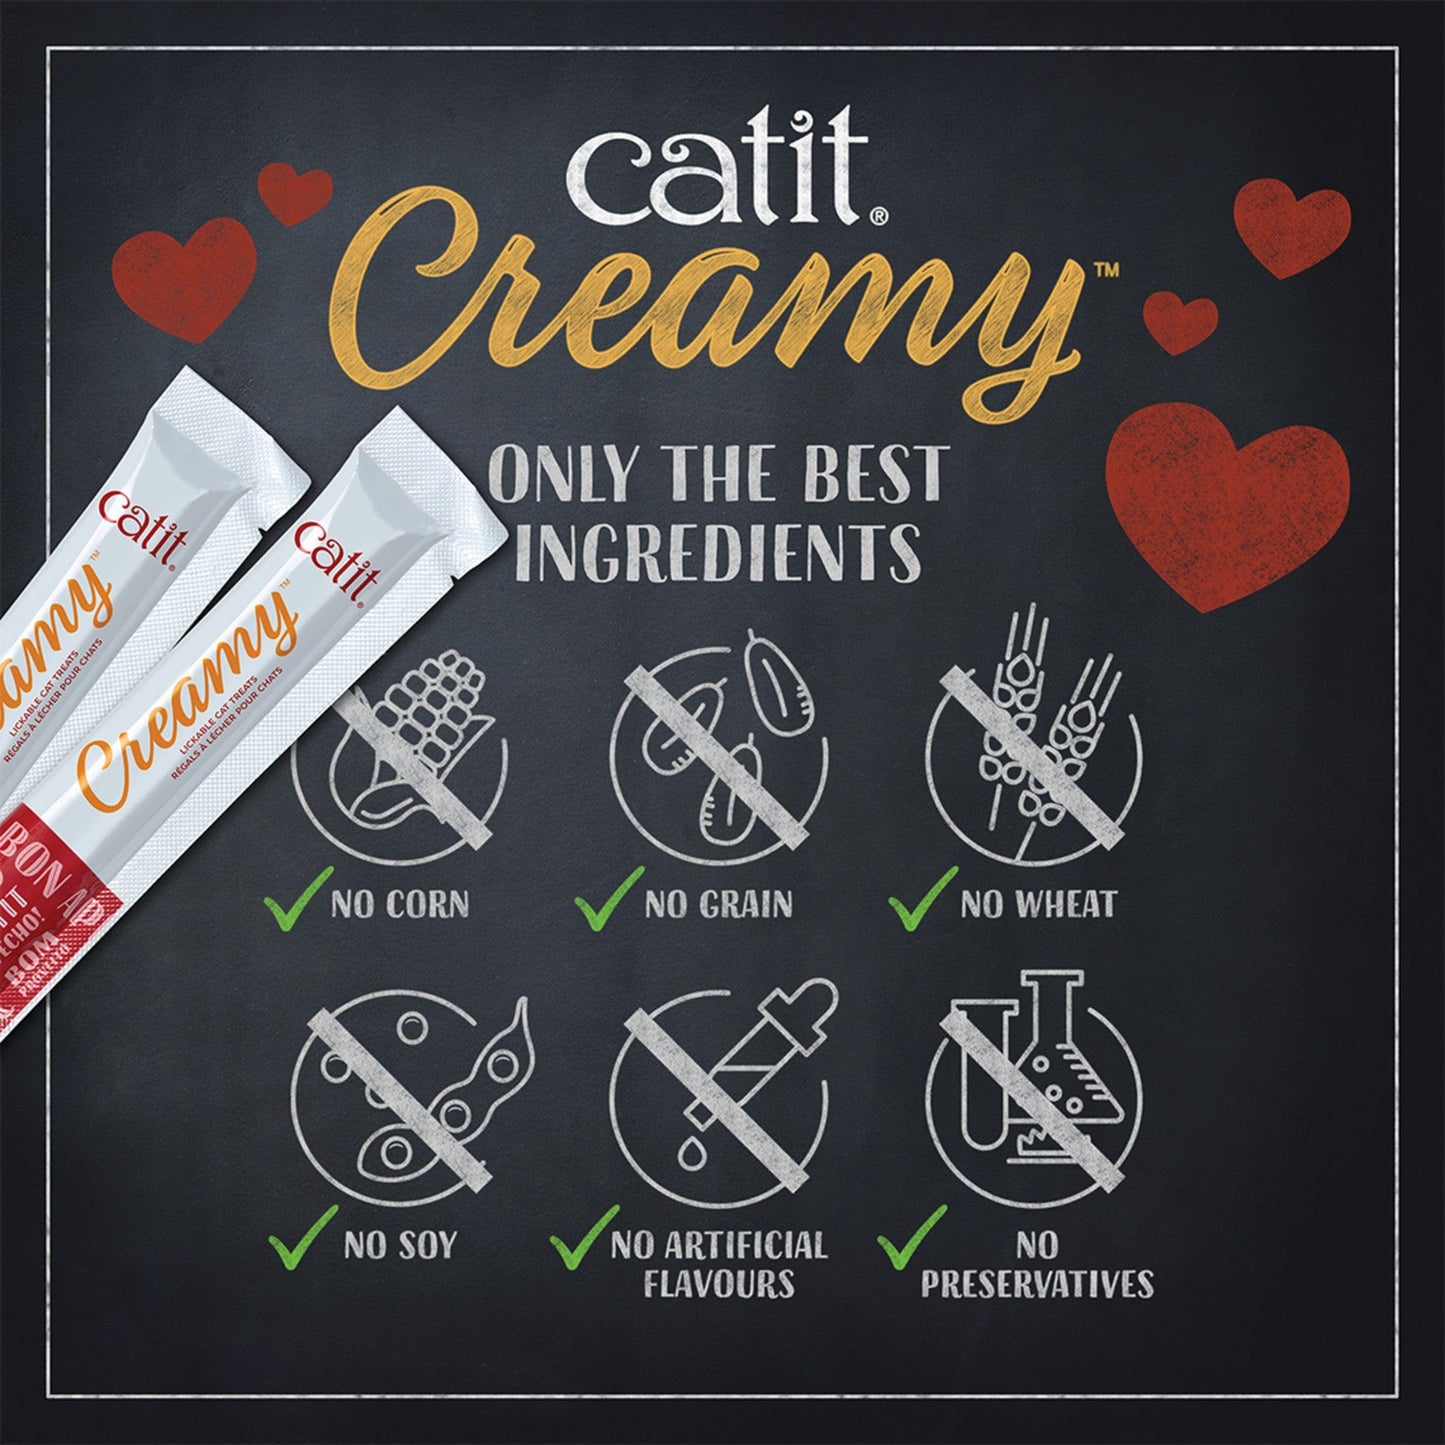 Catit Creamy Cat Treats - 50 Pack - Salmon and Prawn